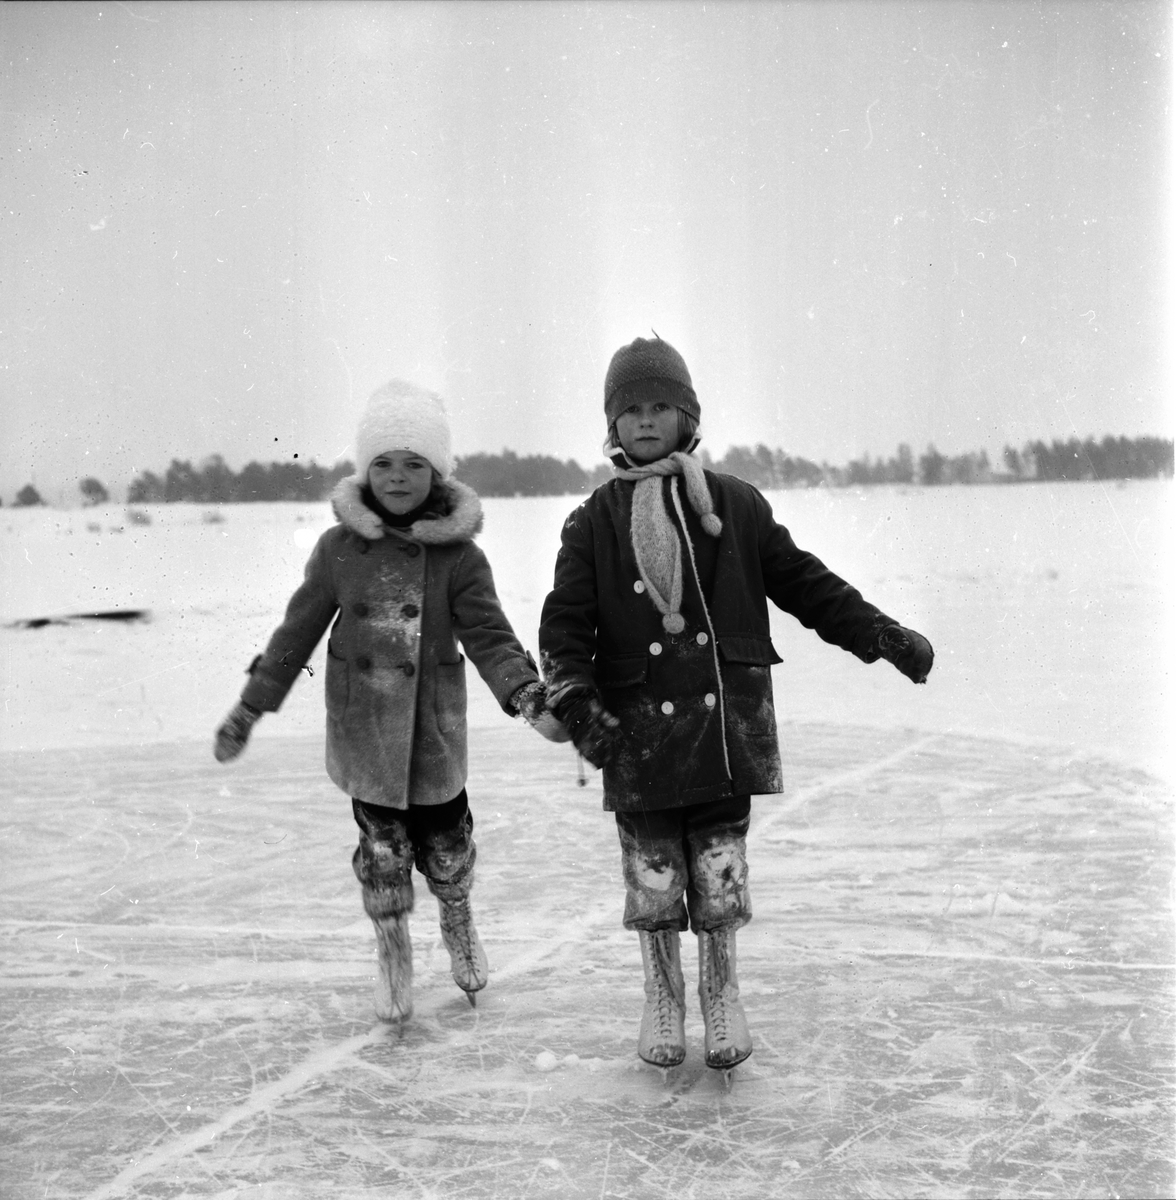 Skridskoåkande barn,
Februari 1960